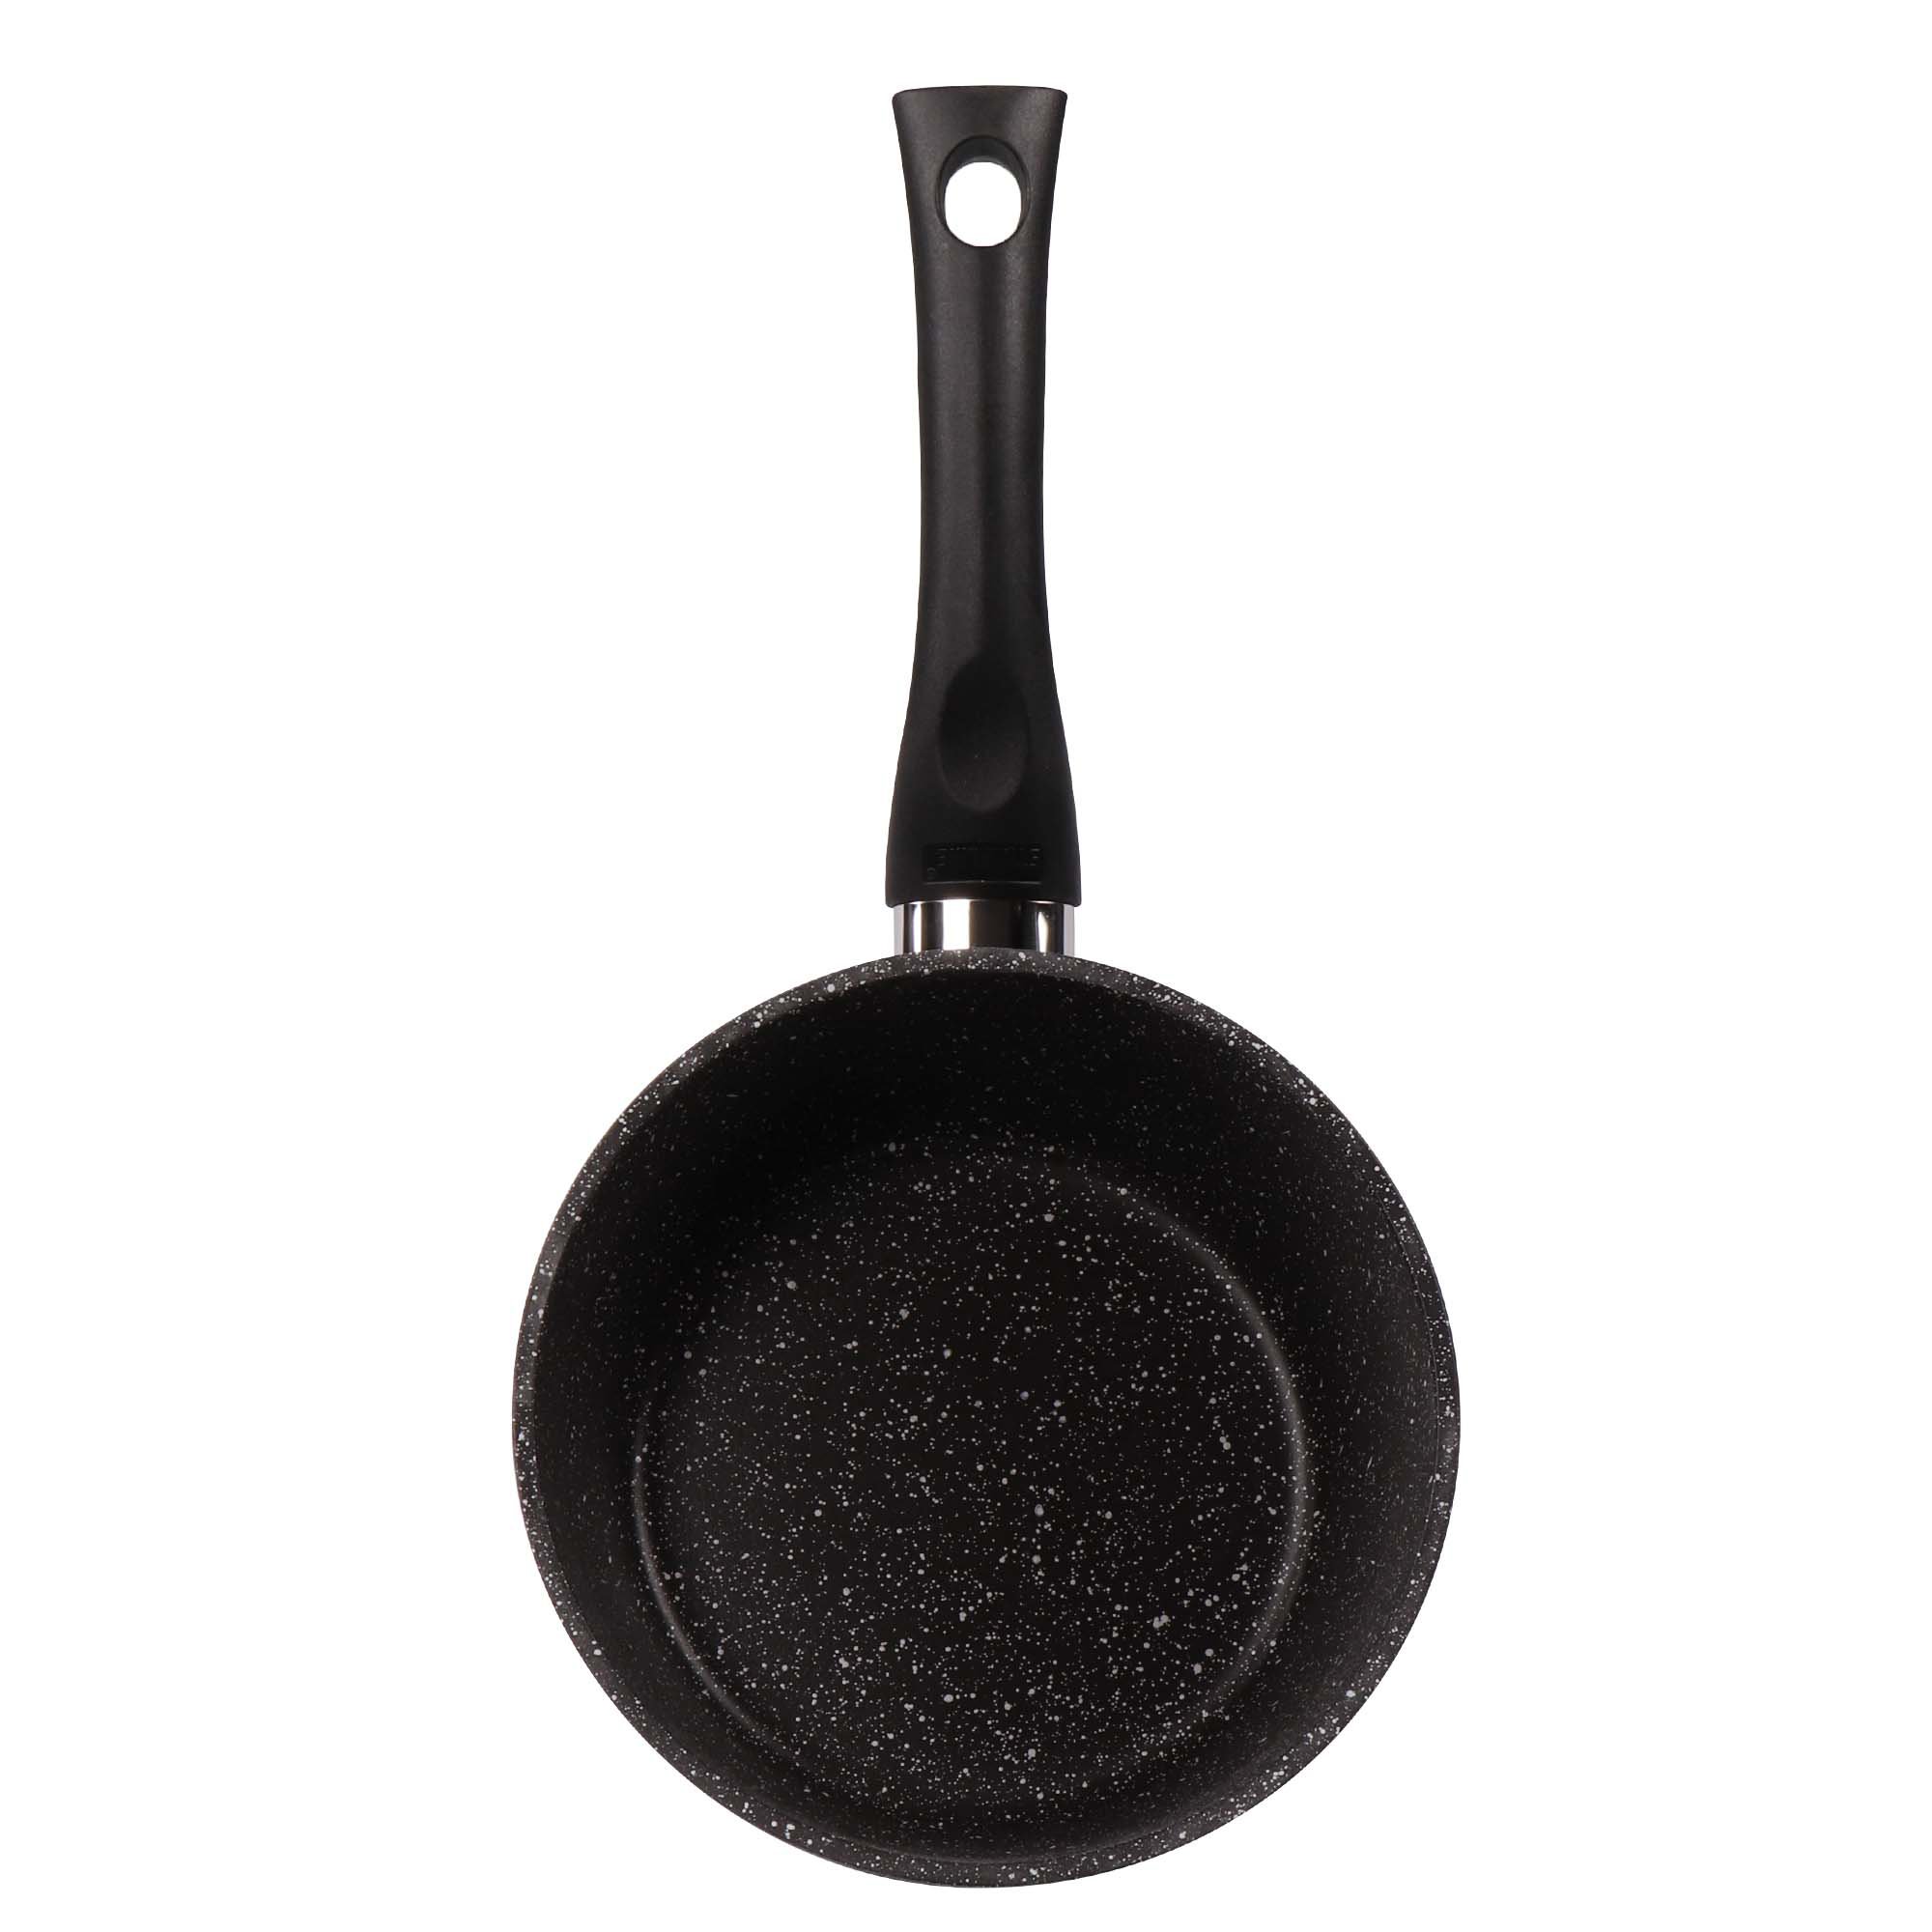 STONELINE® Saucepan 18 cm, with Lid, Skillet, Carbon neutral Non-Stick Pan | PRIMO